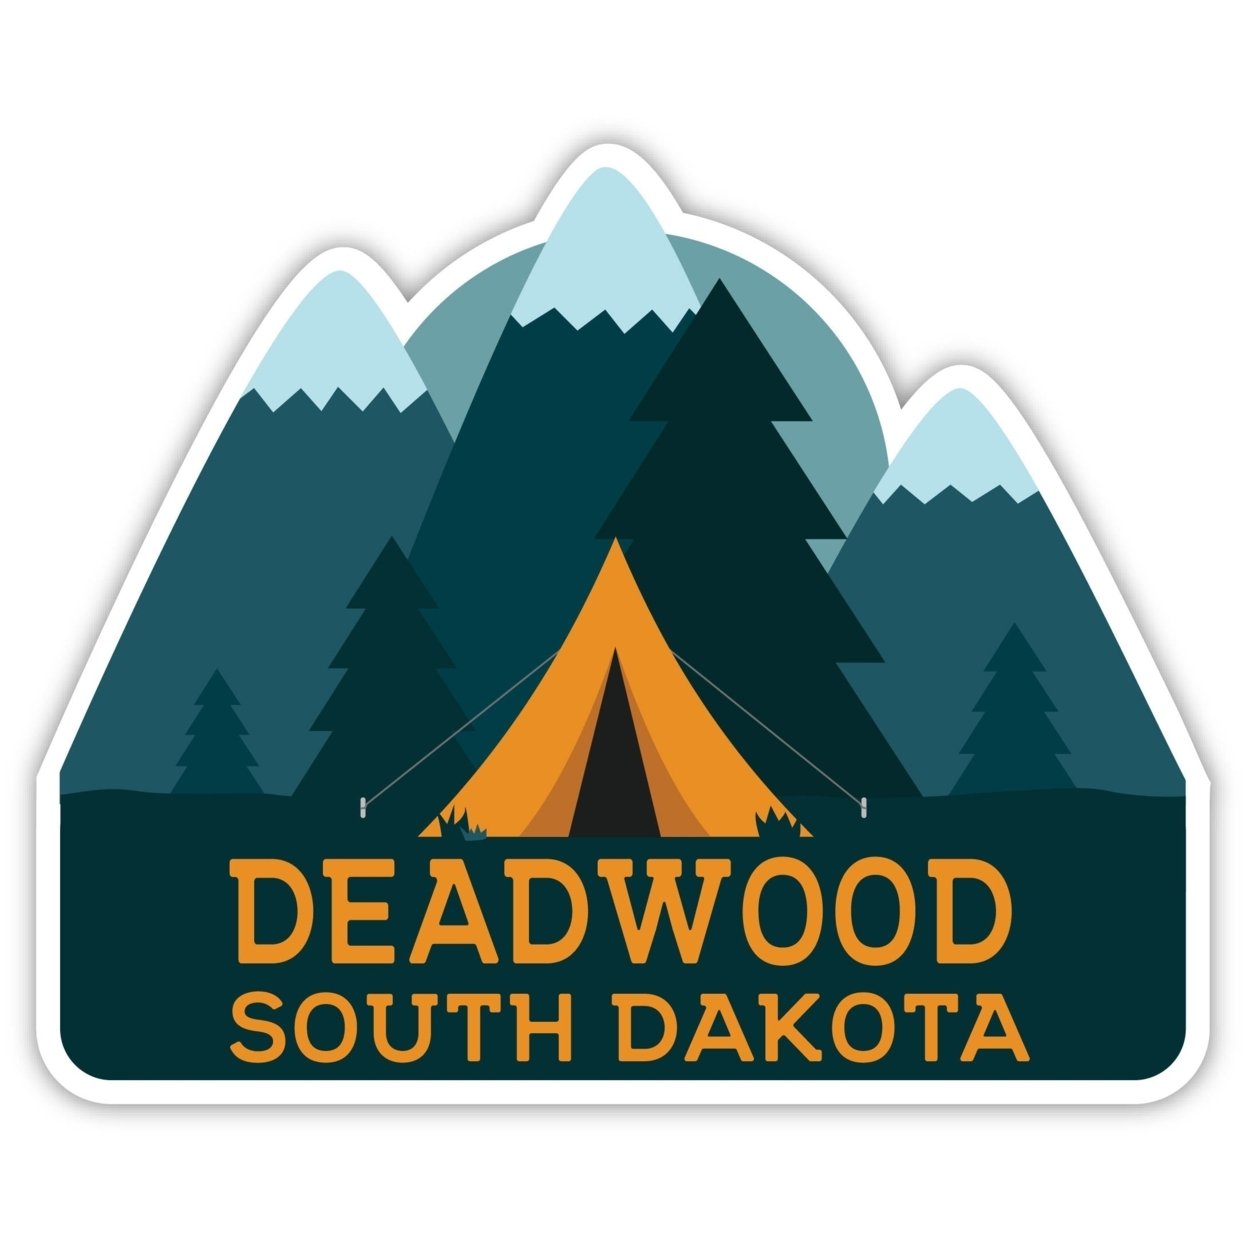 Deadwood South Dakota Souvenir Decorative Stickers (Choose Theme And Size) - Single Unit, 4-Inch, Adventures Awaits